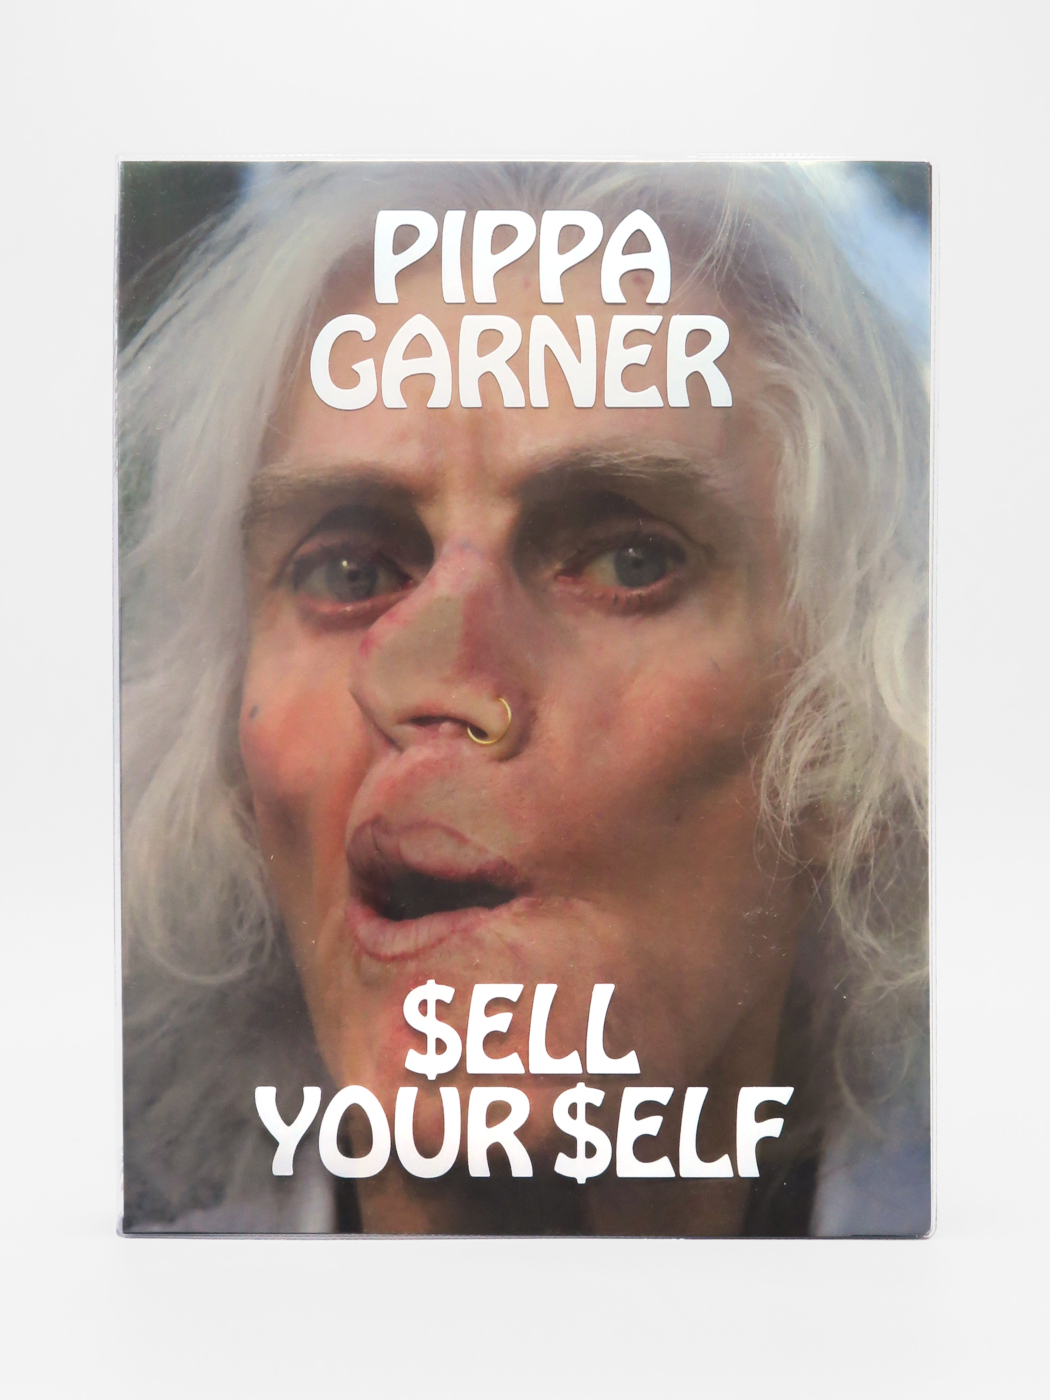 Pippa Garner, $ELL YOUR $ELF